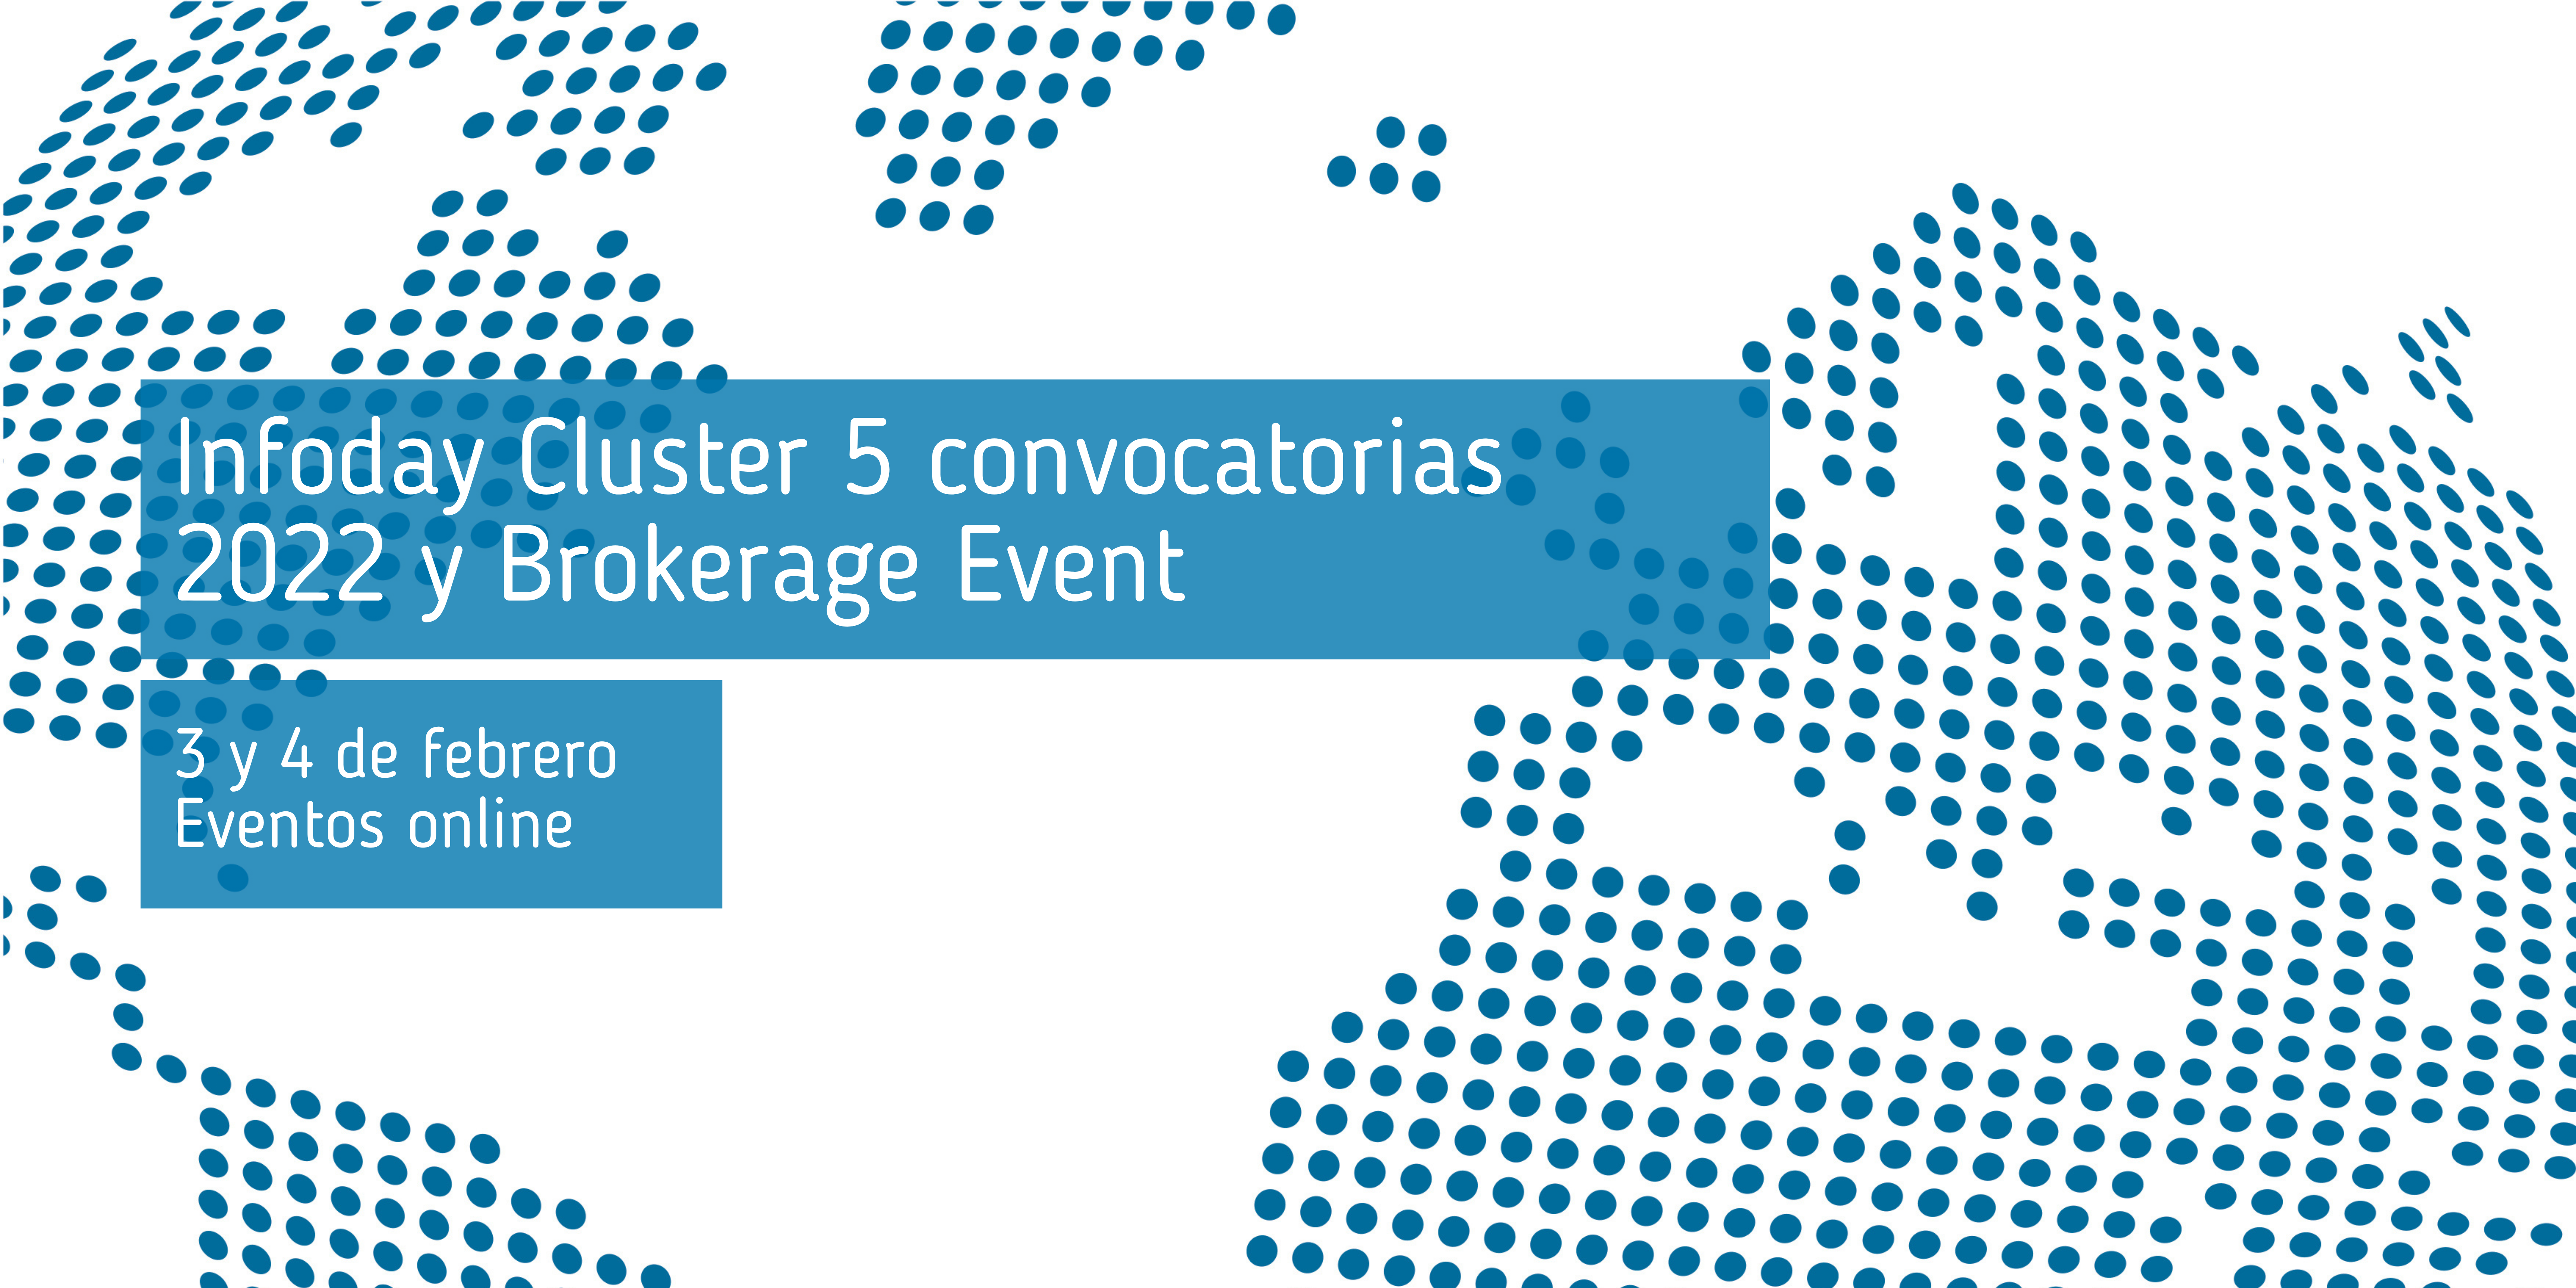 Infoday_cluster_5_convocatorias_2022_brokerage_event